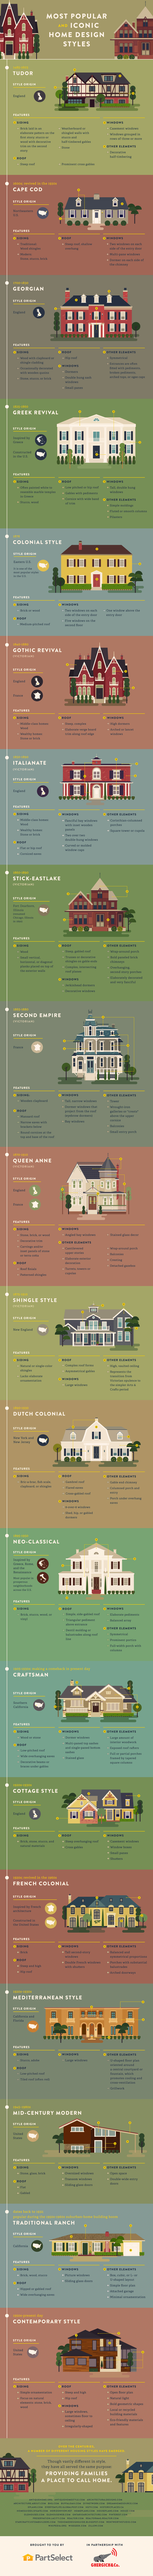 global vernacular homes infographic